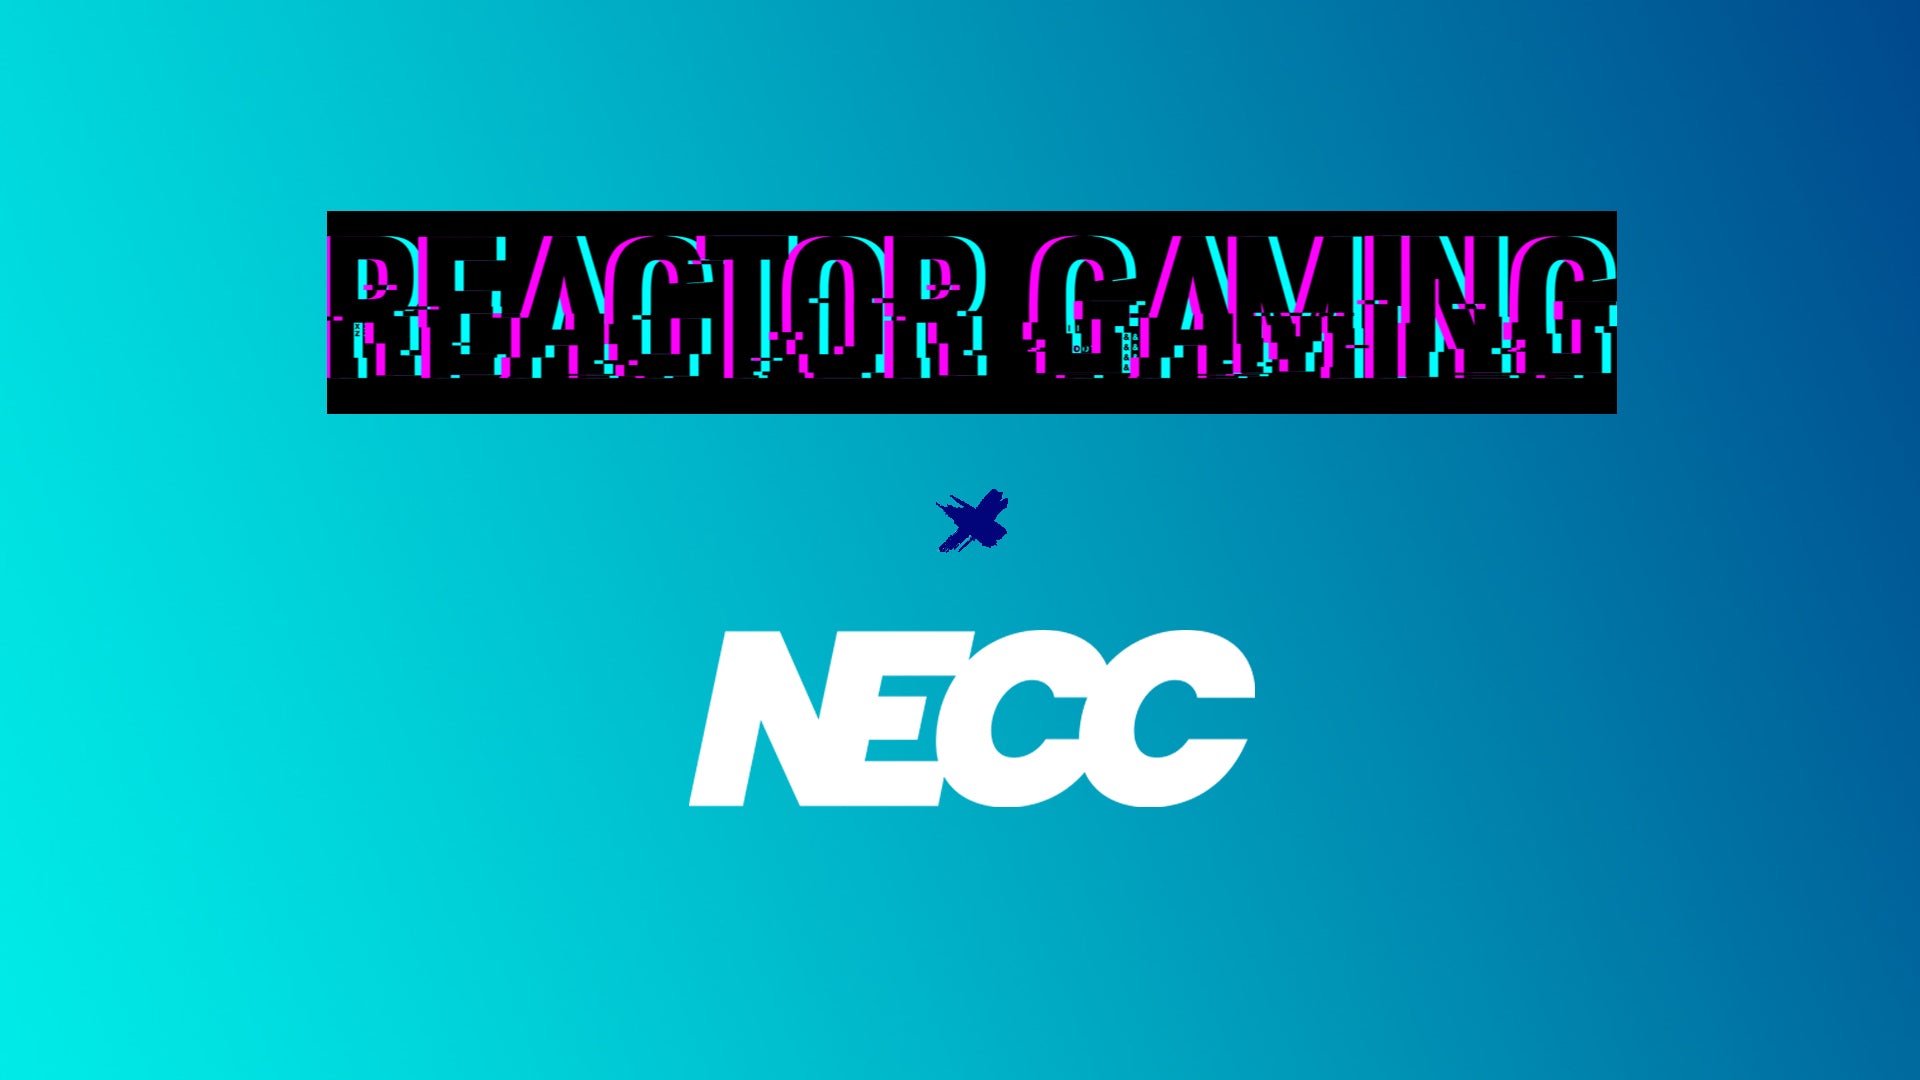 NECC Announces Partnership with Reactor Gaming